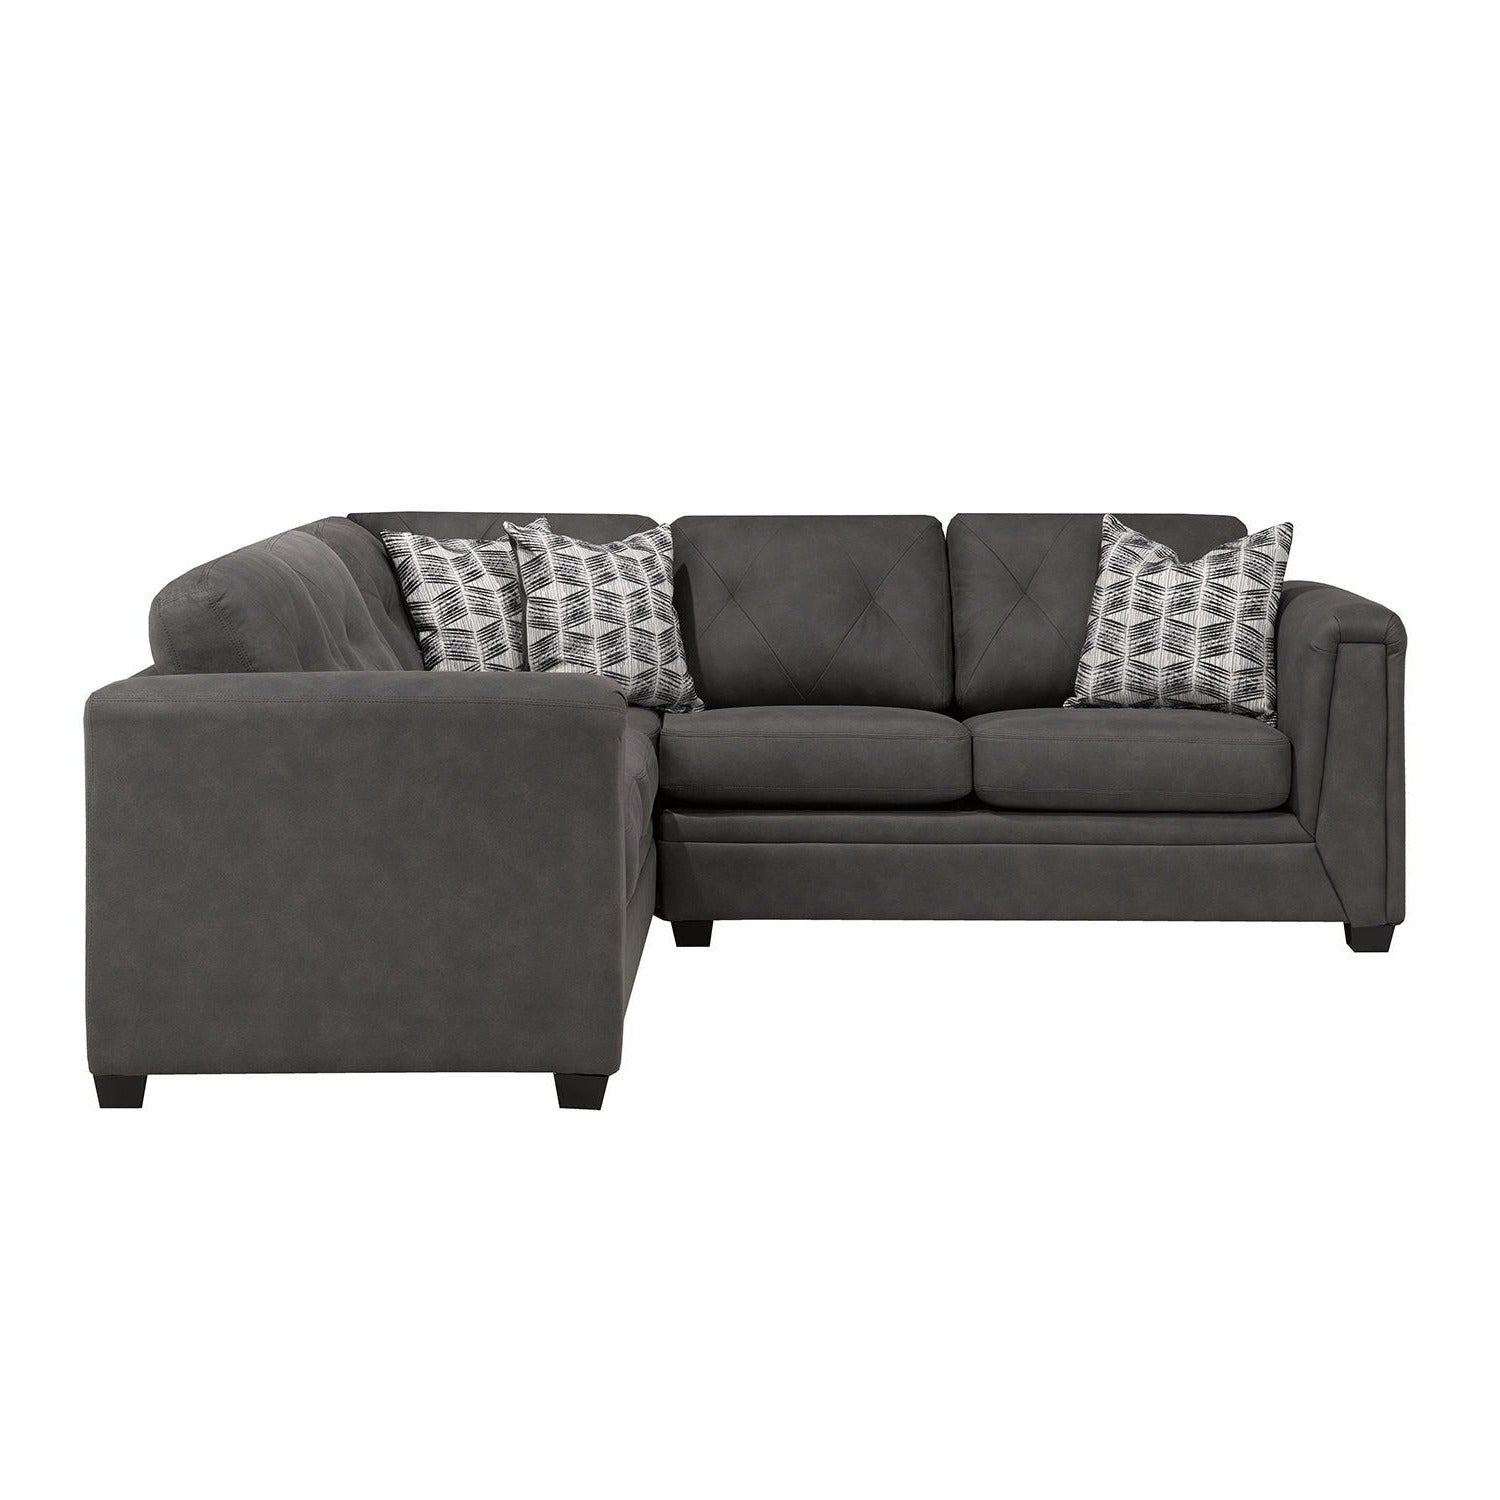 9822 sectional sofa brown